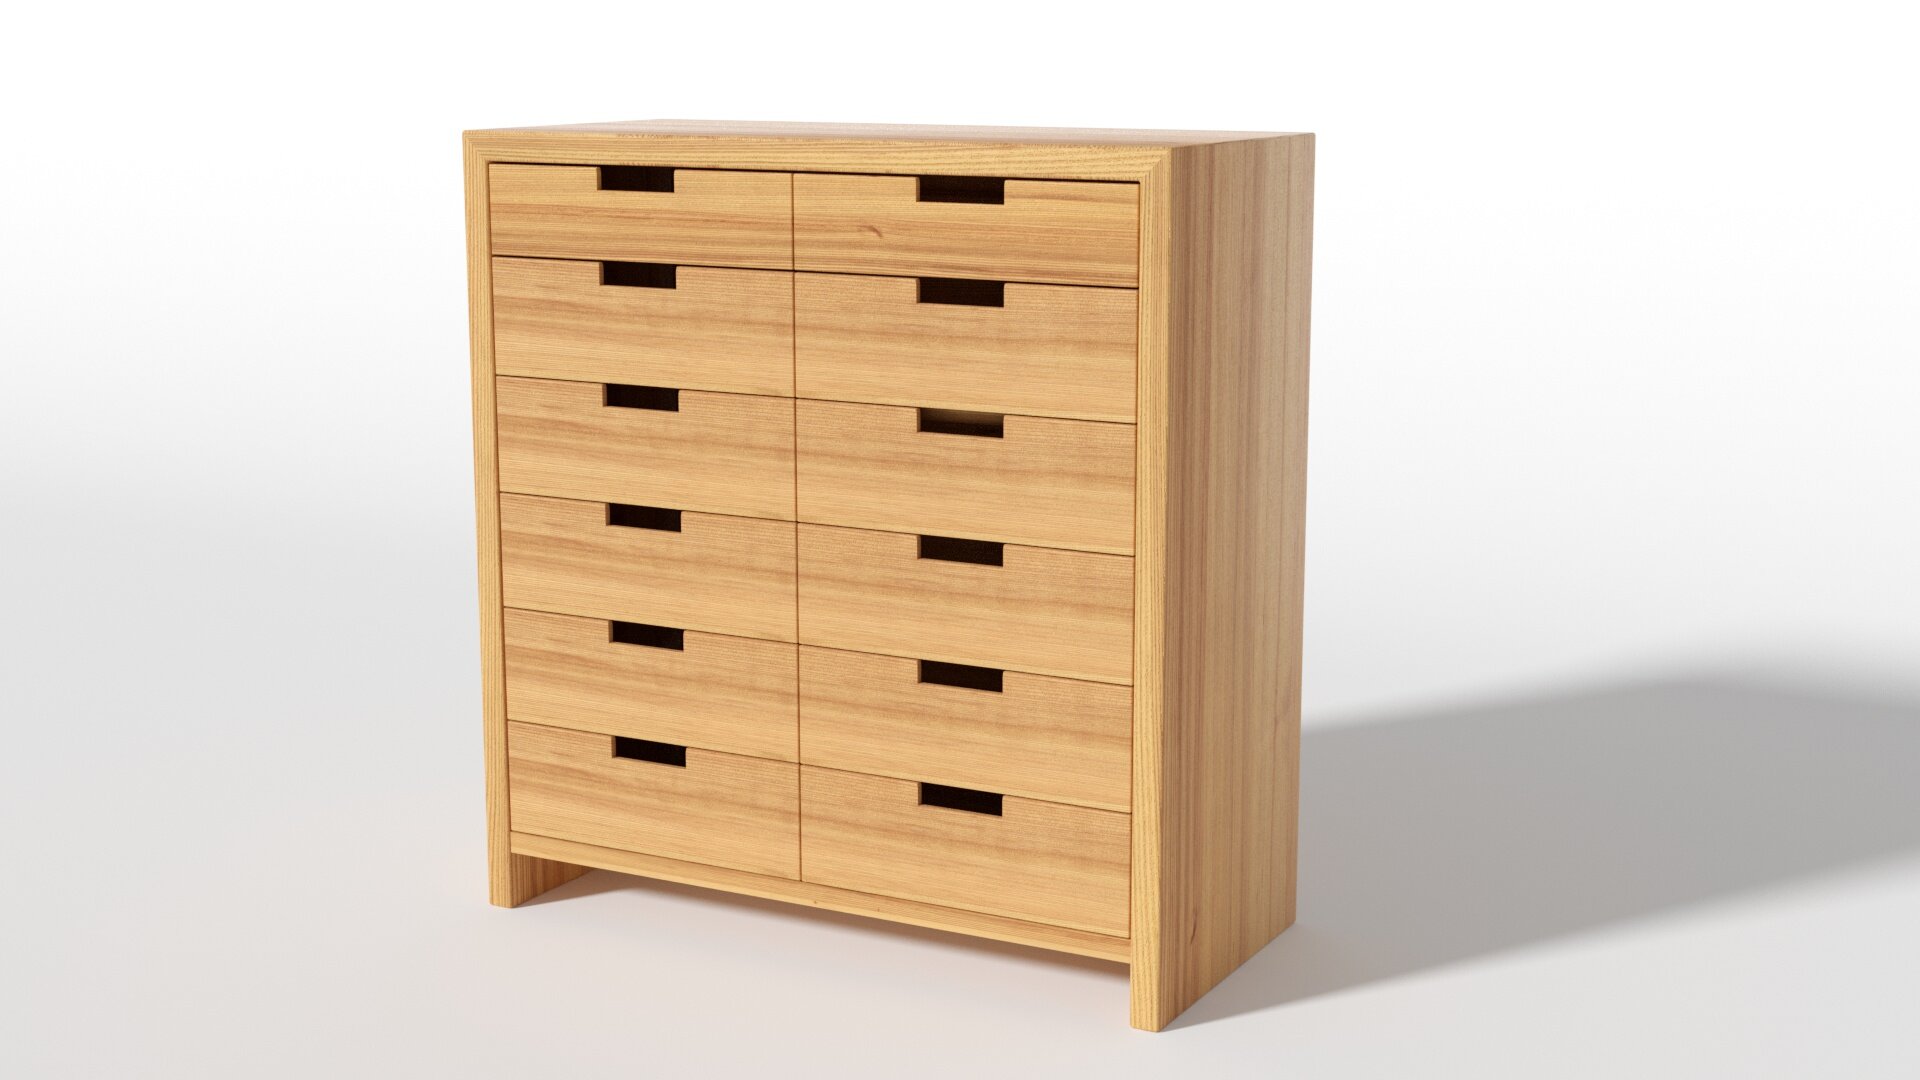 EK_Reedy_Furniture_Double_Drawer_Bureau_No_Hardware_Solid_Oak_Luxury_Modern_Handmade_Furnitture.jpg